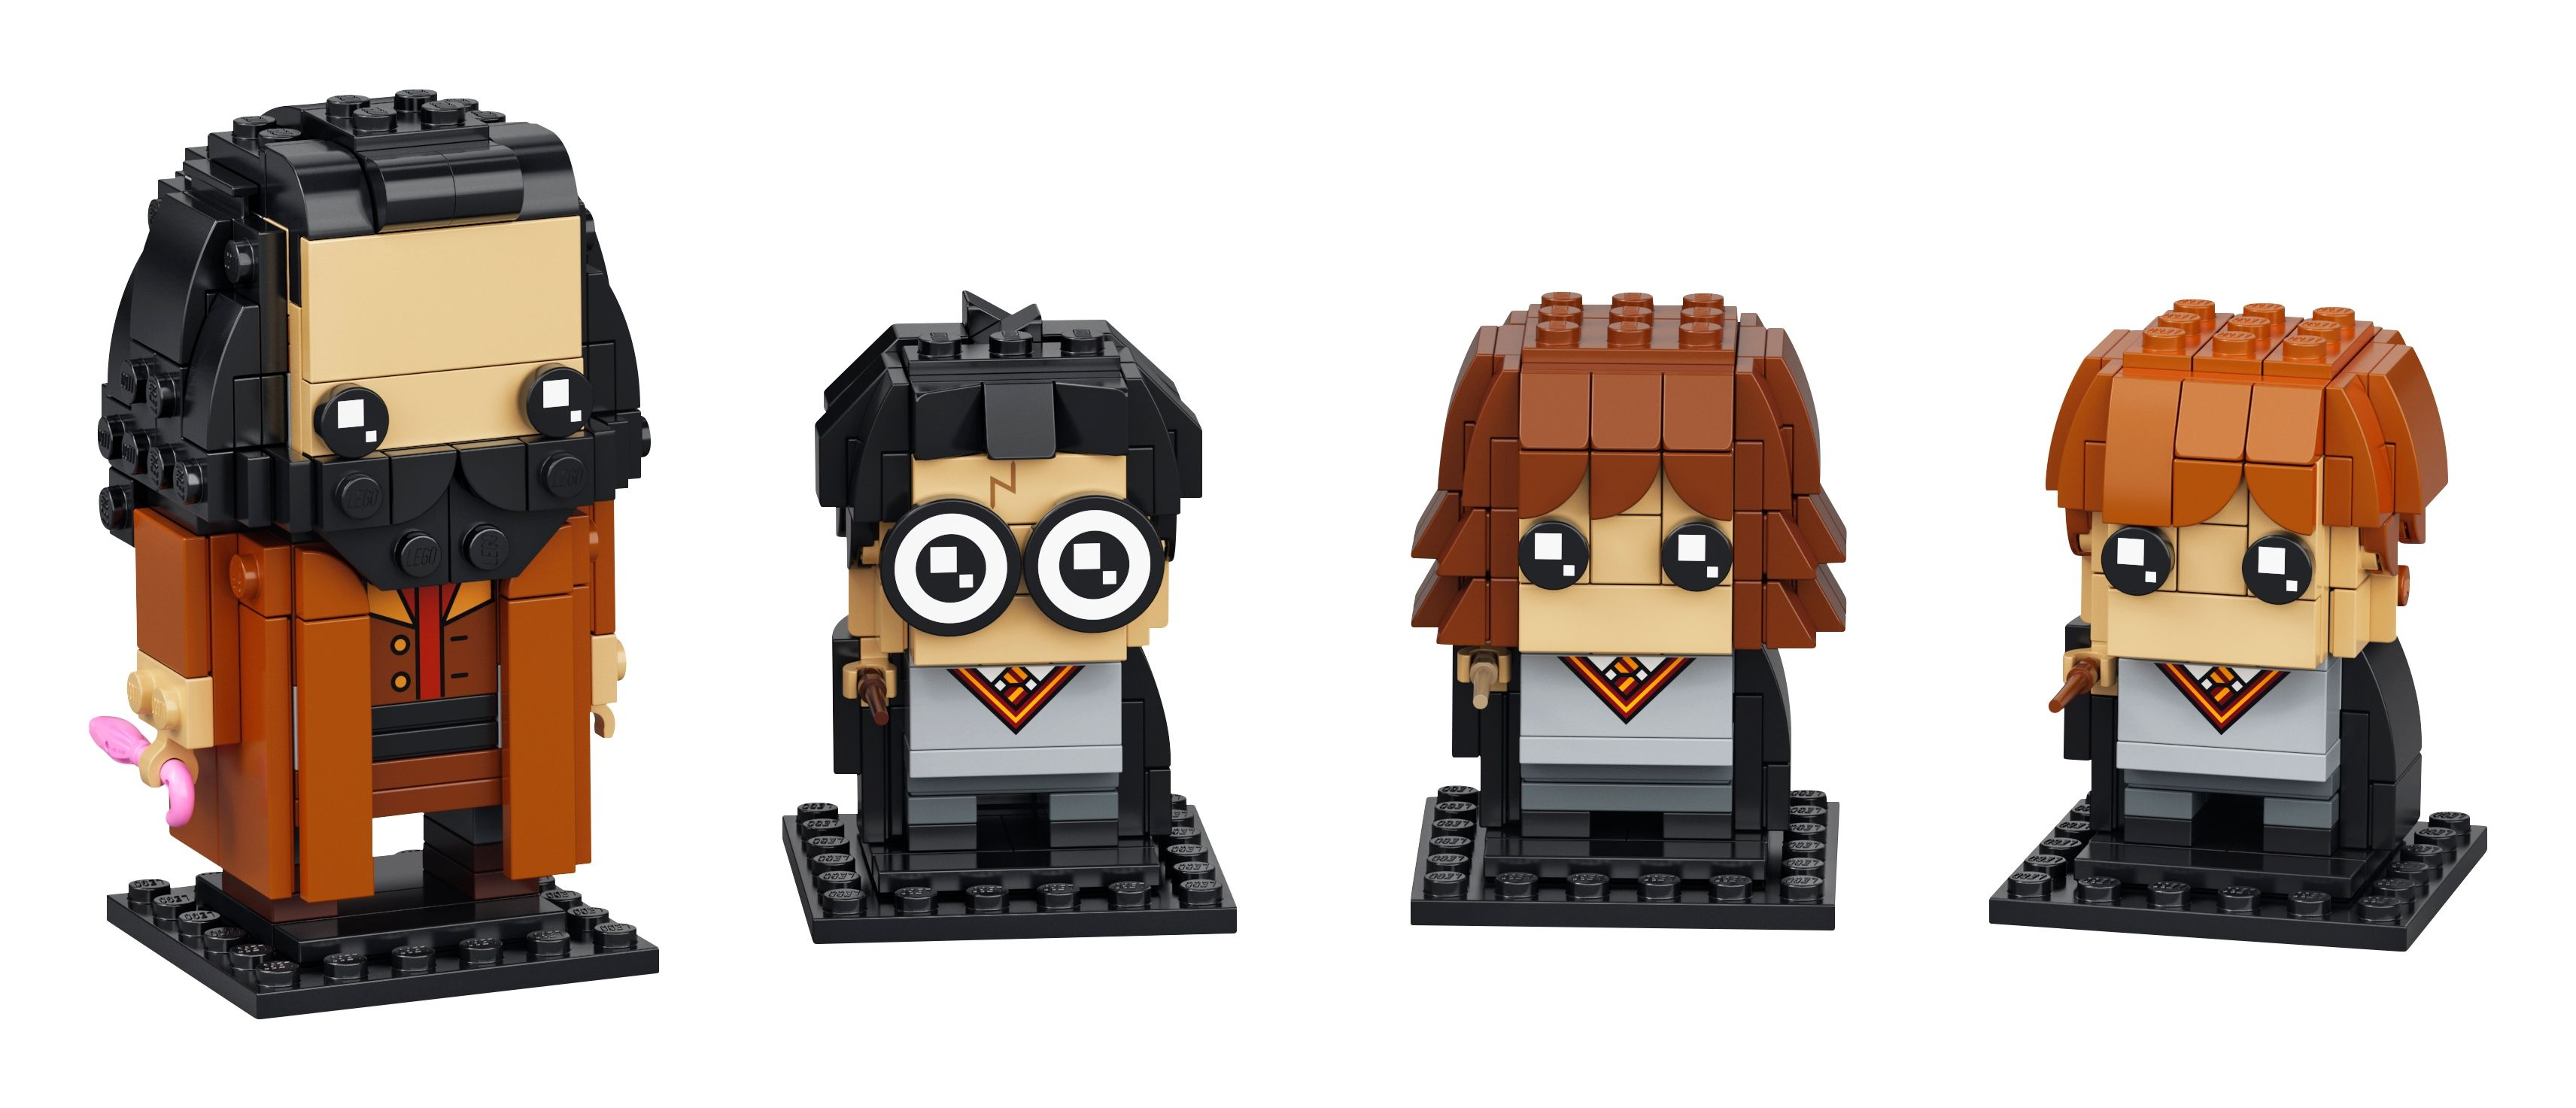 40495 Hagrid™ Bausatz & Harry, Hermine, LEGO Ron